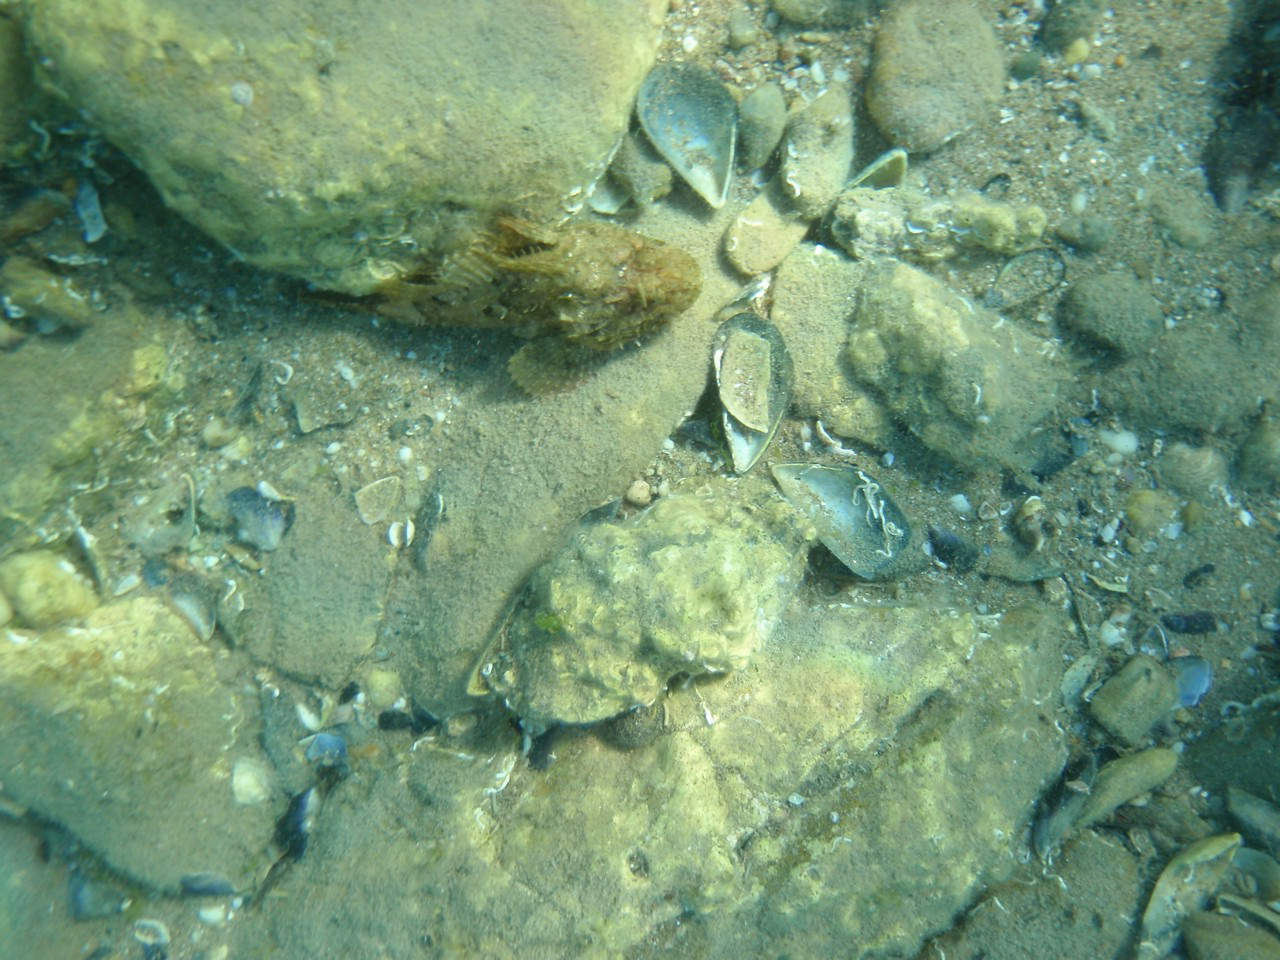 a rock in the water near some rocks